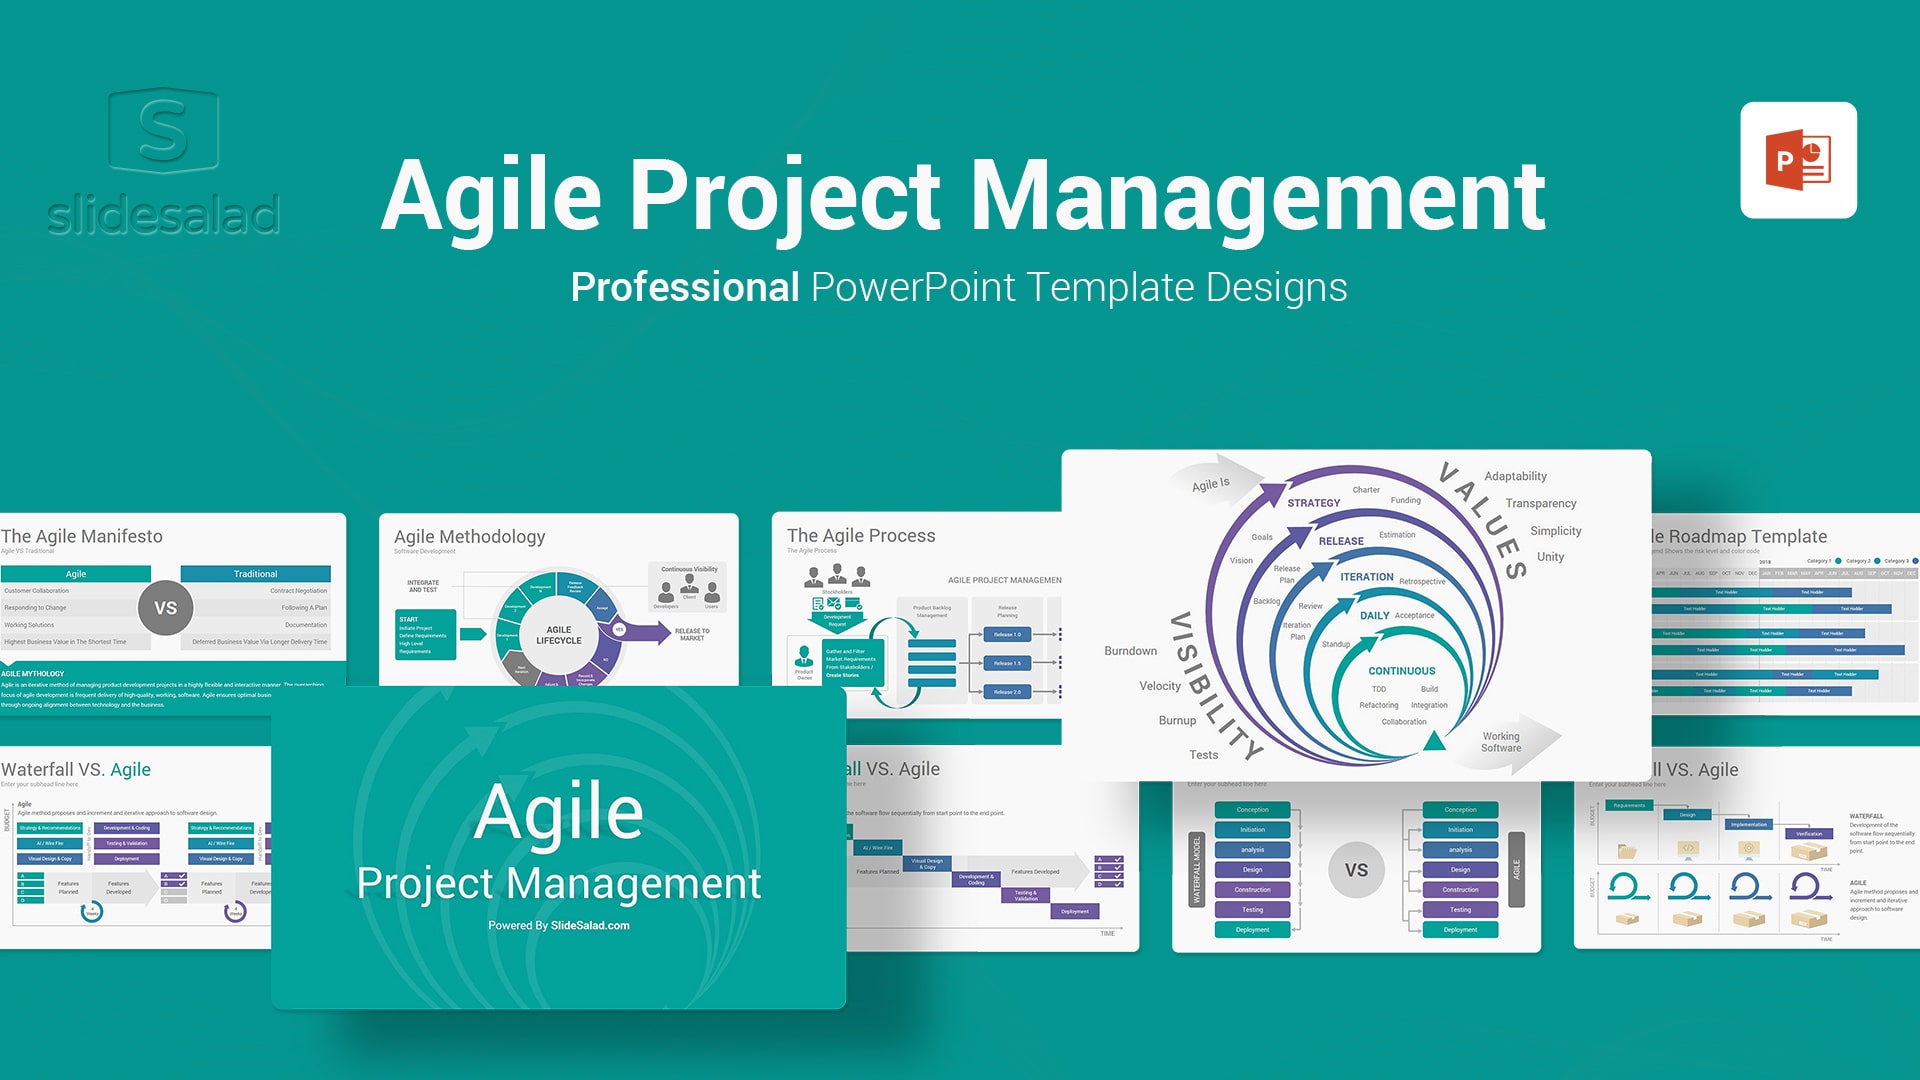 Agile Project Management PowerPoint Presentation Template